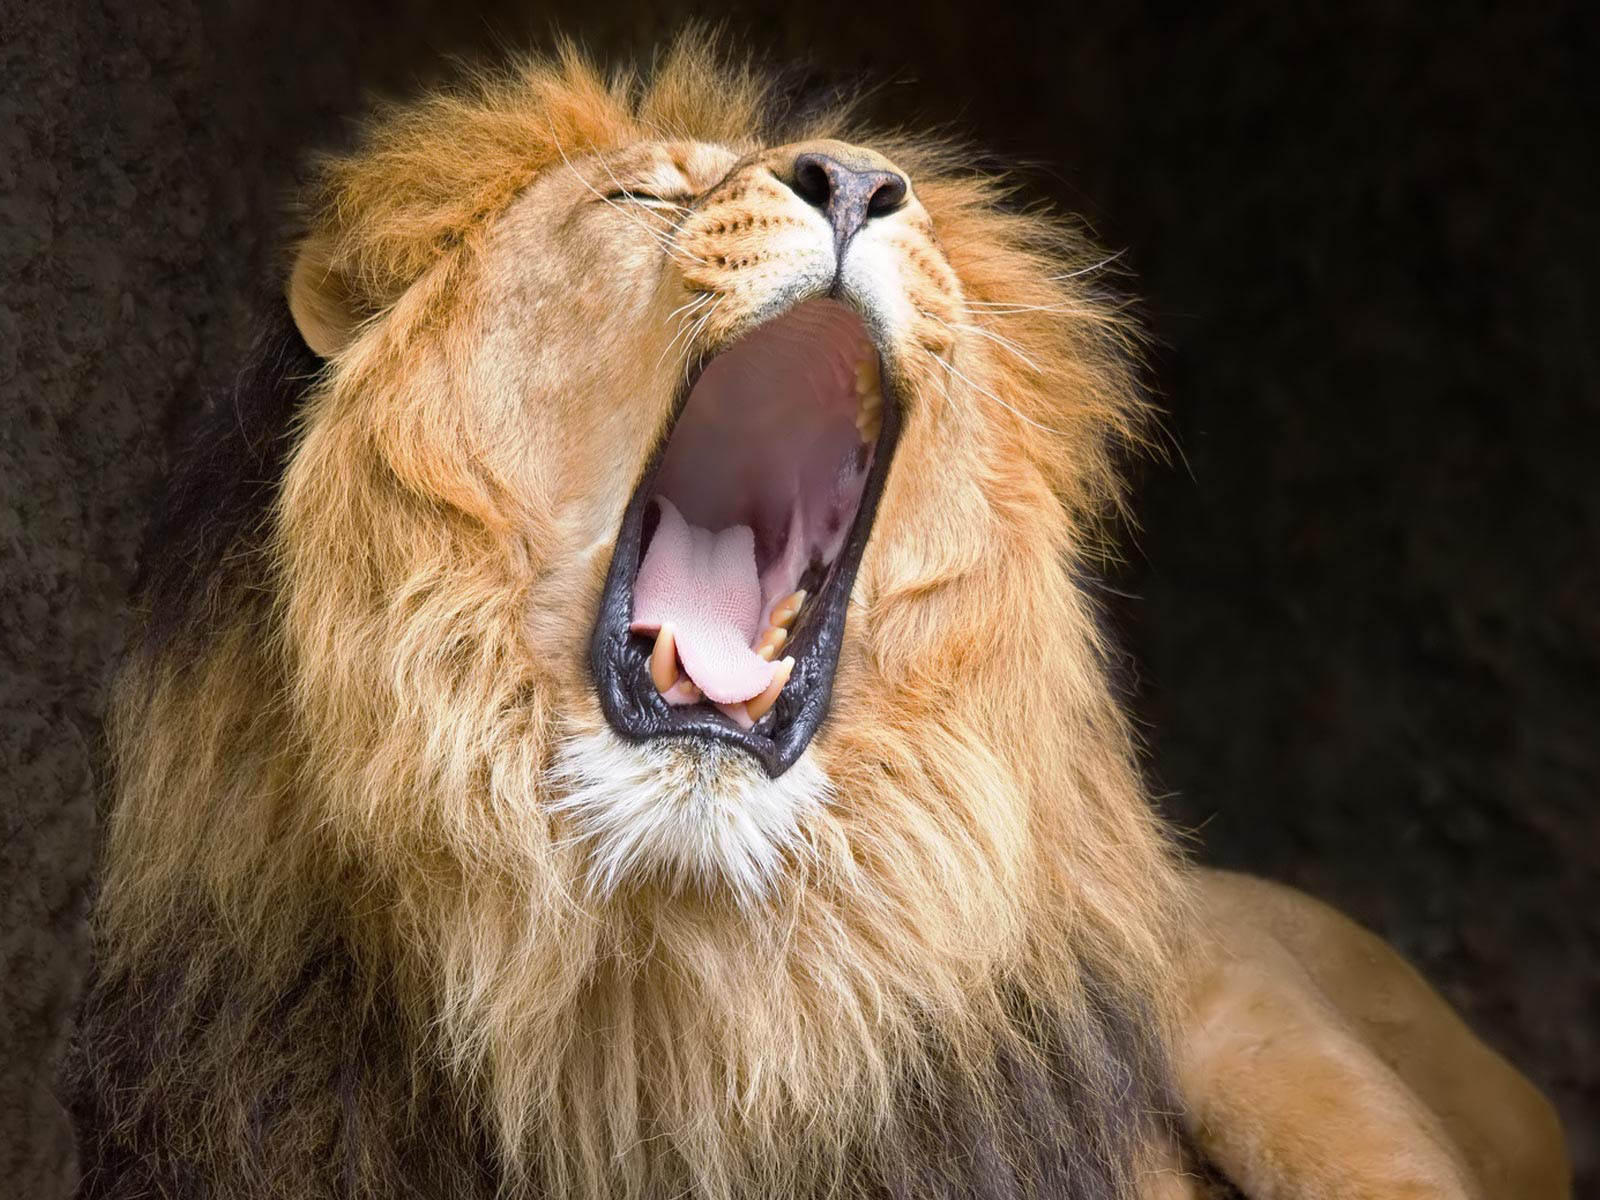 Roaring Lion Wallpaper HD - Apps on Google Play